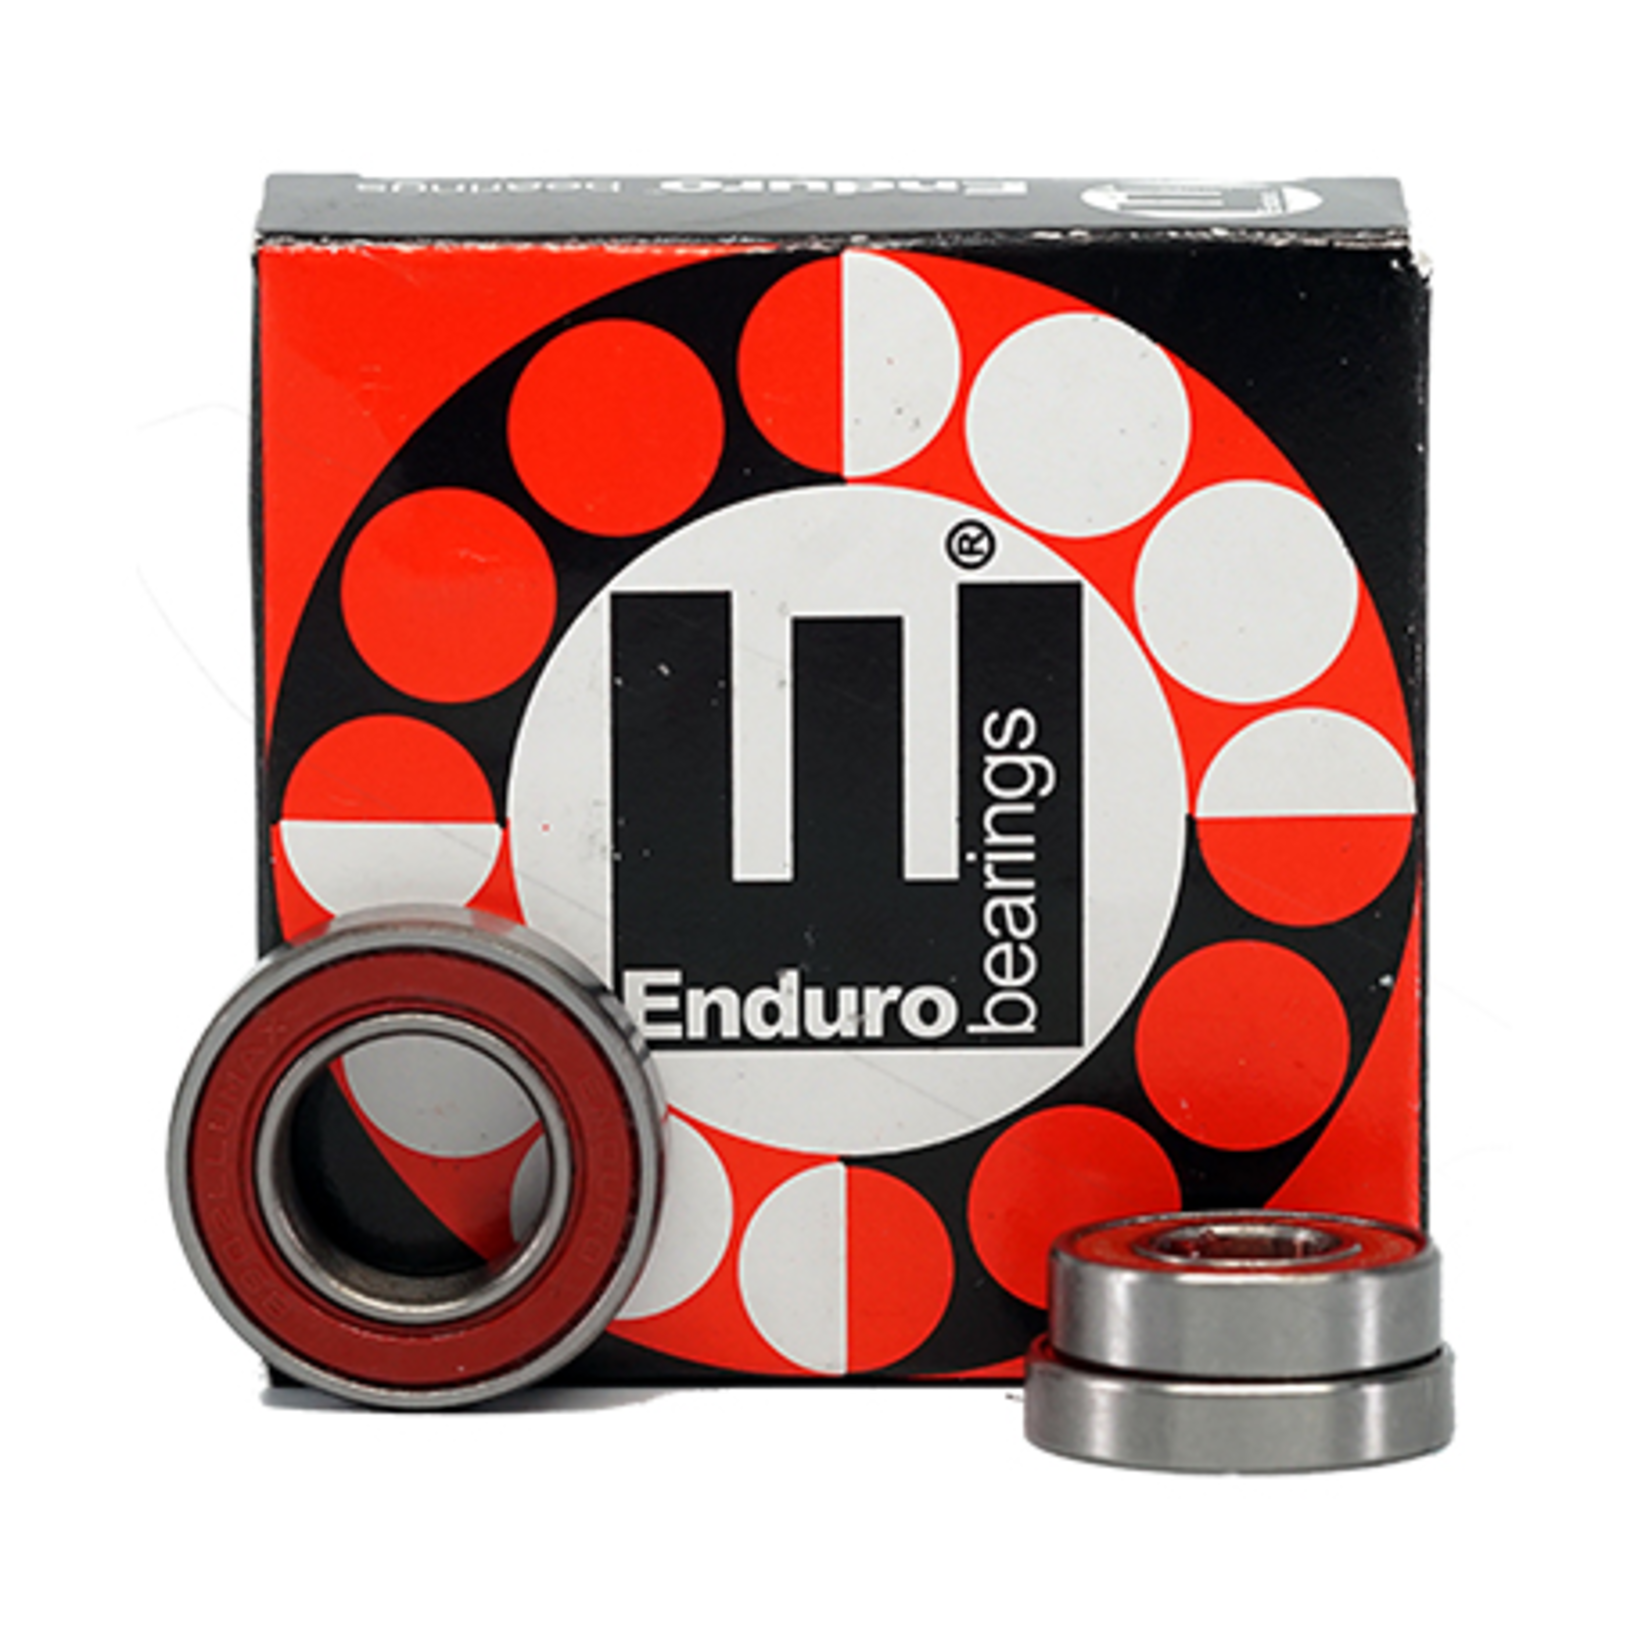 Enduro - MAX Bearing Kit: (2018-2022 Trunnion Shock Models) - Includes All Bearings